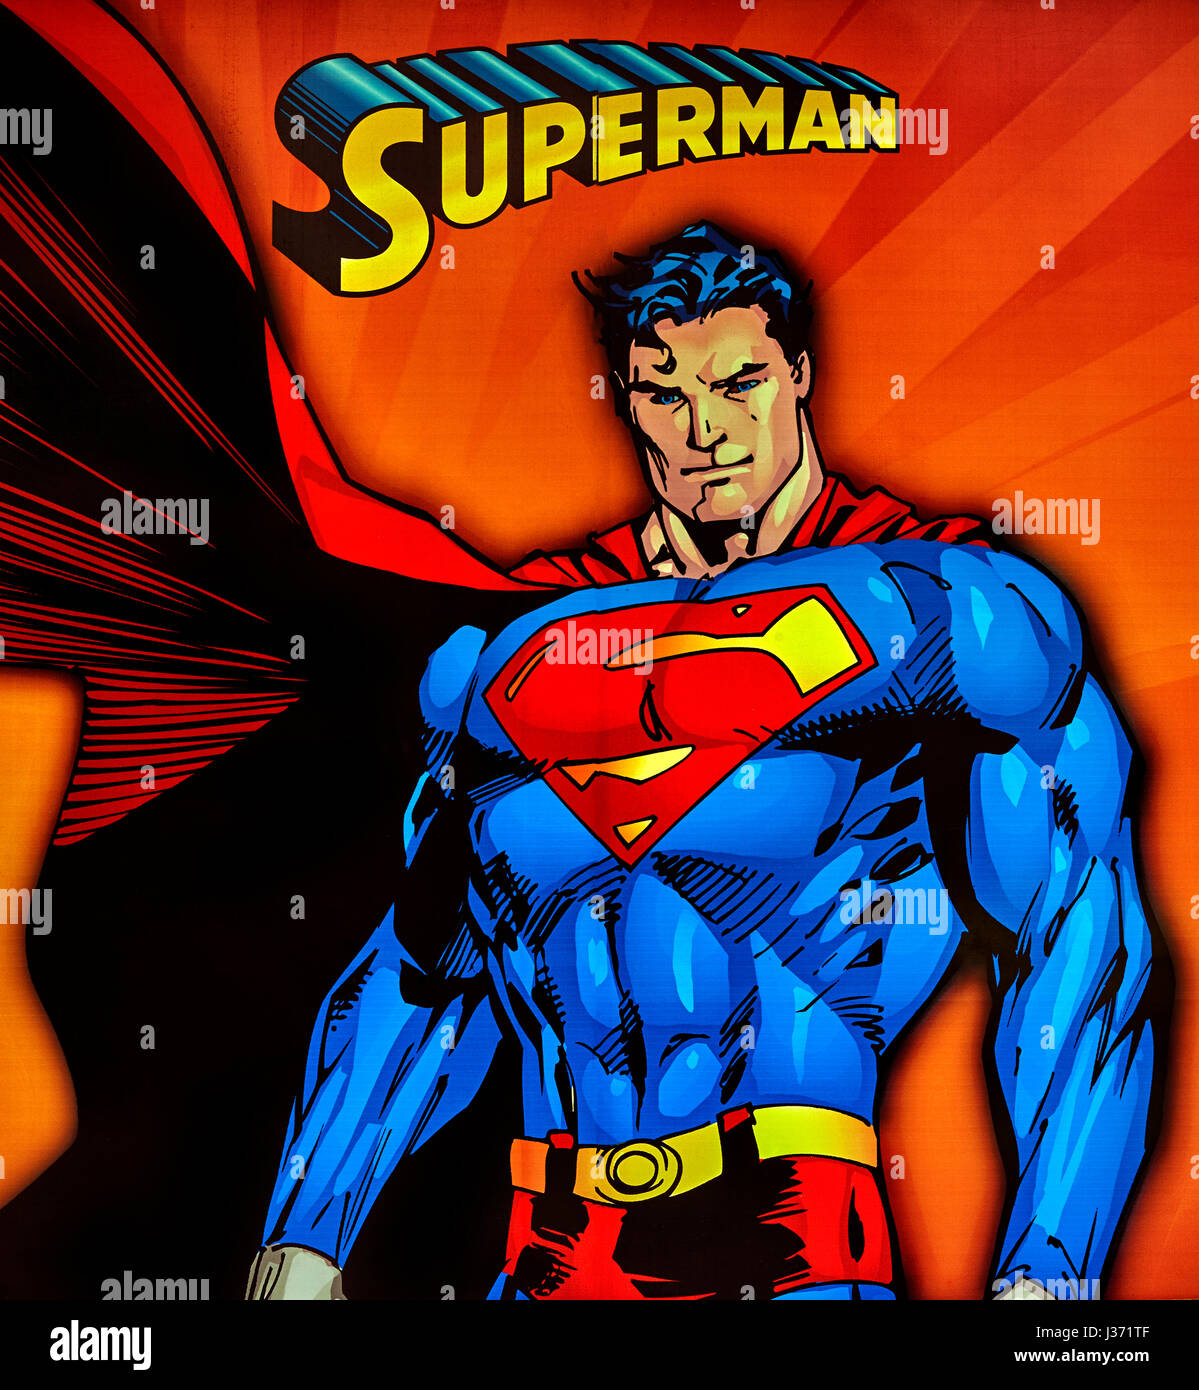 Superman poster, Superhero Stock Photo